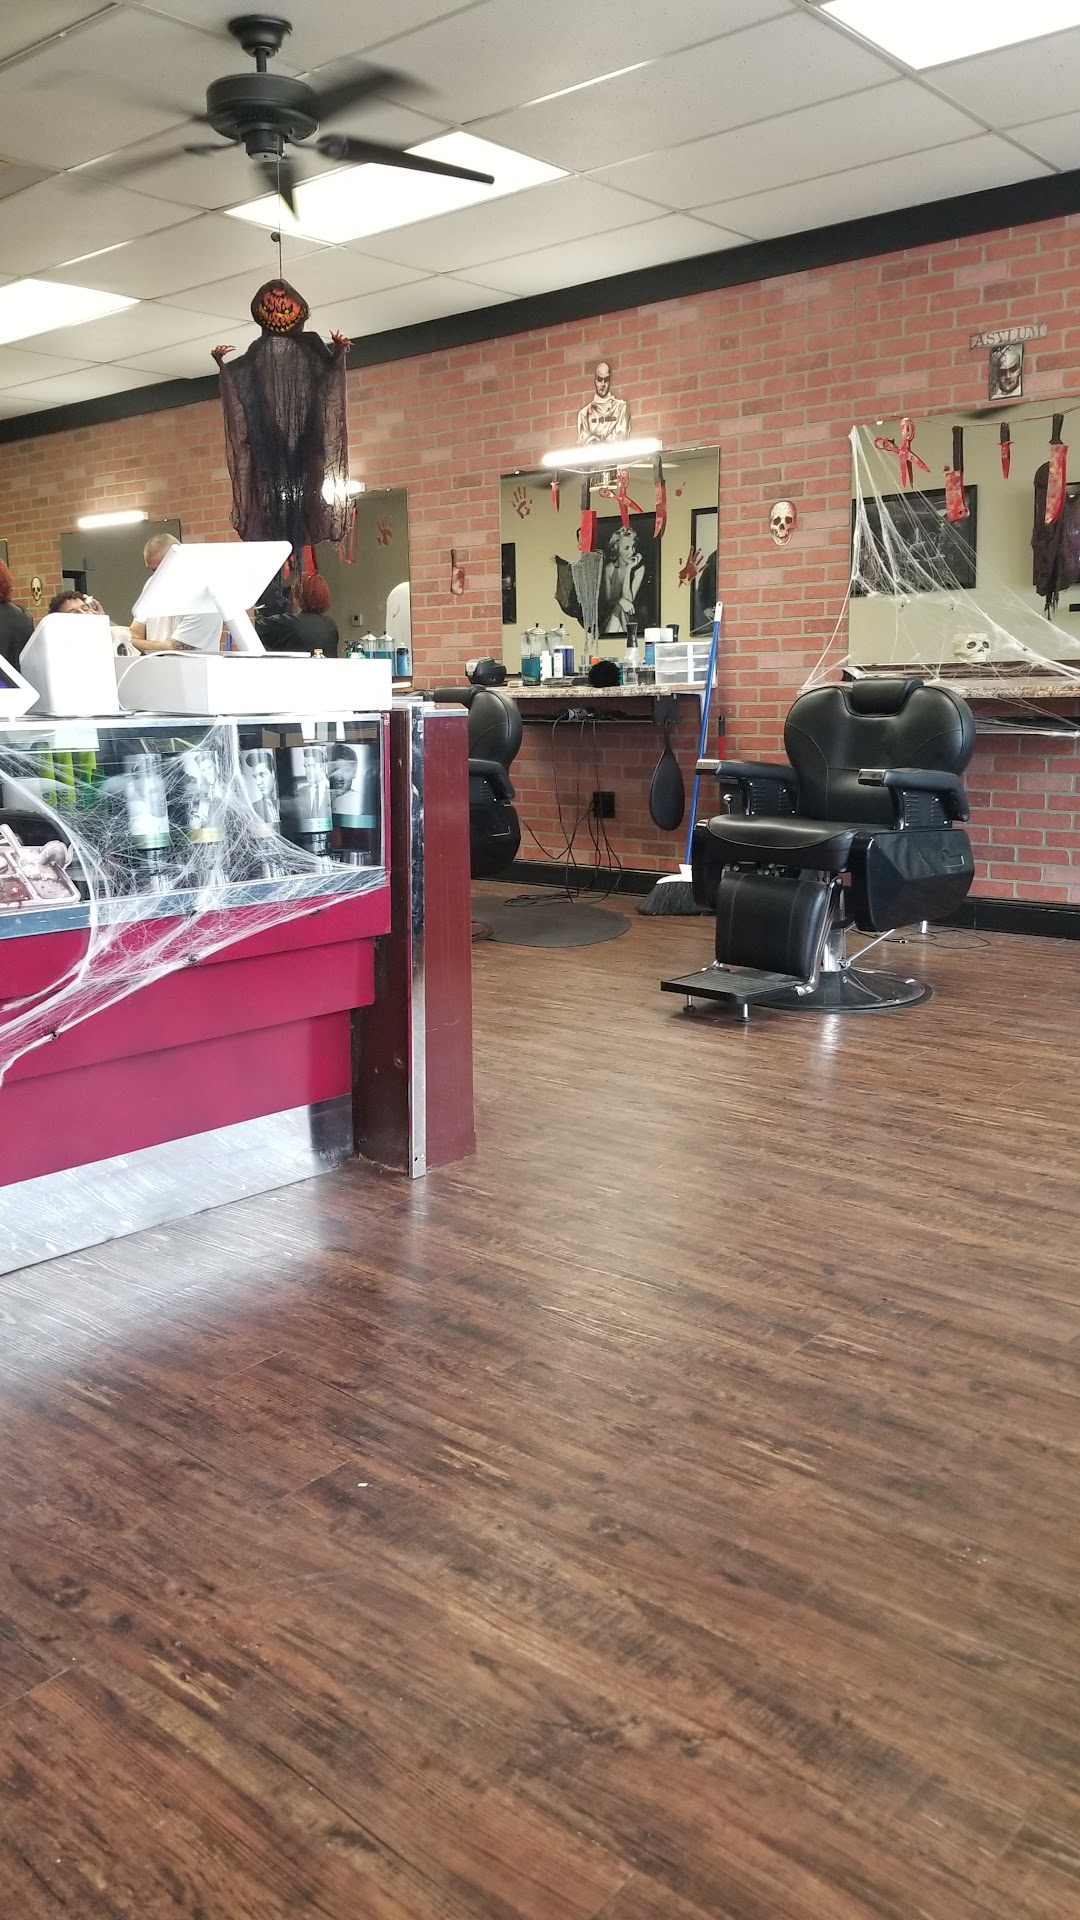 The Atascocita Barber Shop